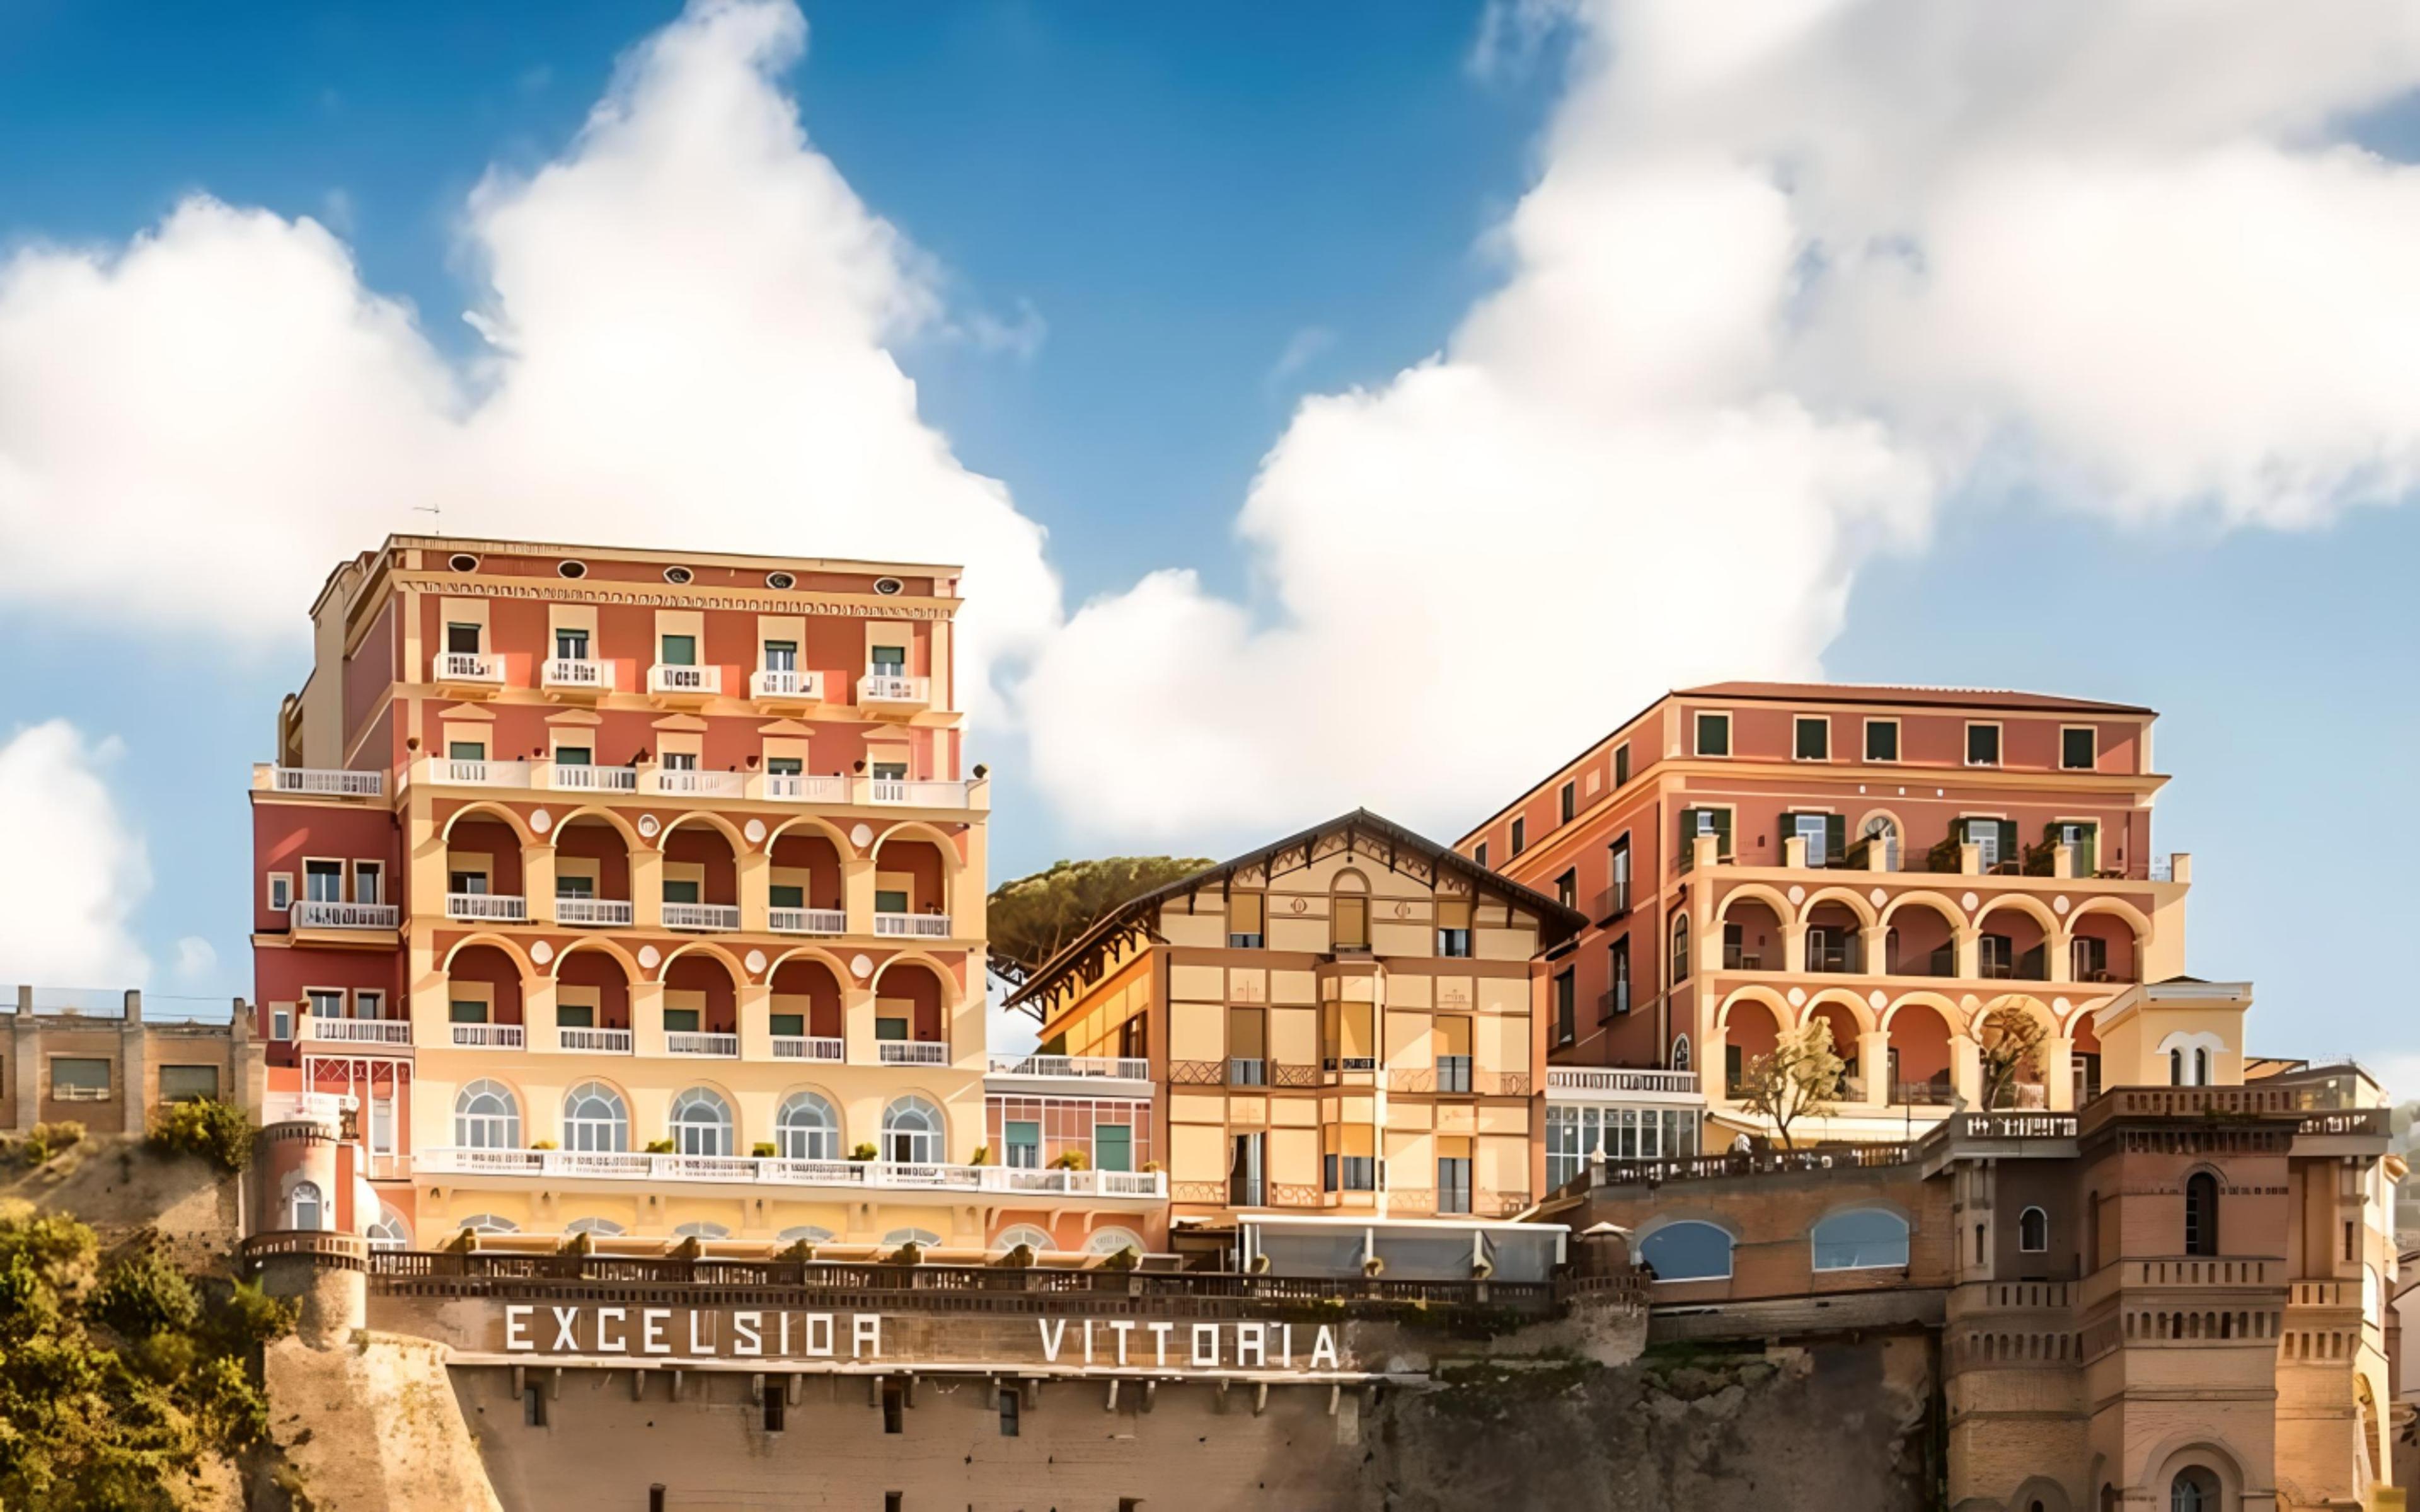 Grand Hotel Excelsior Vittoria - Sorrento, Italy